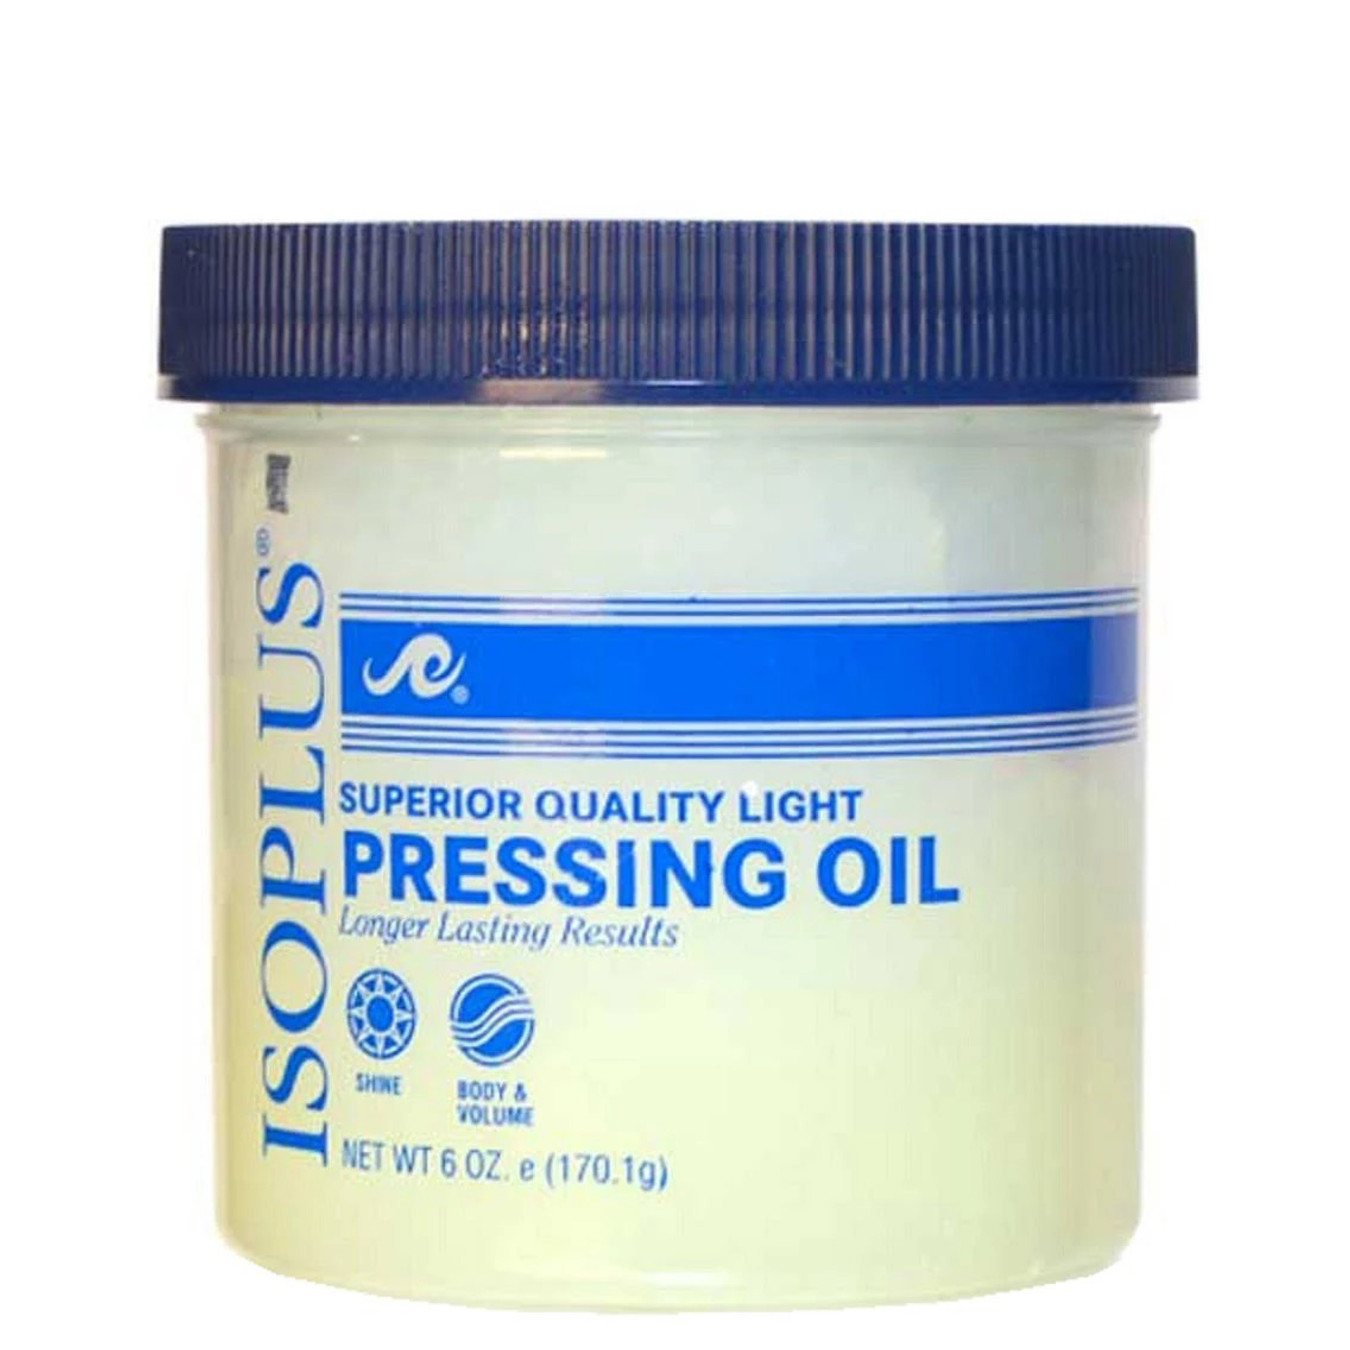 ISOPLUS Superior Quality Light Pressing Oil (6 oz)